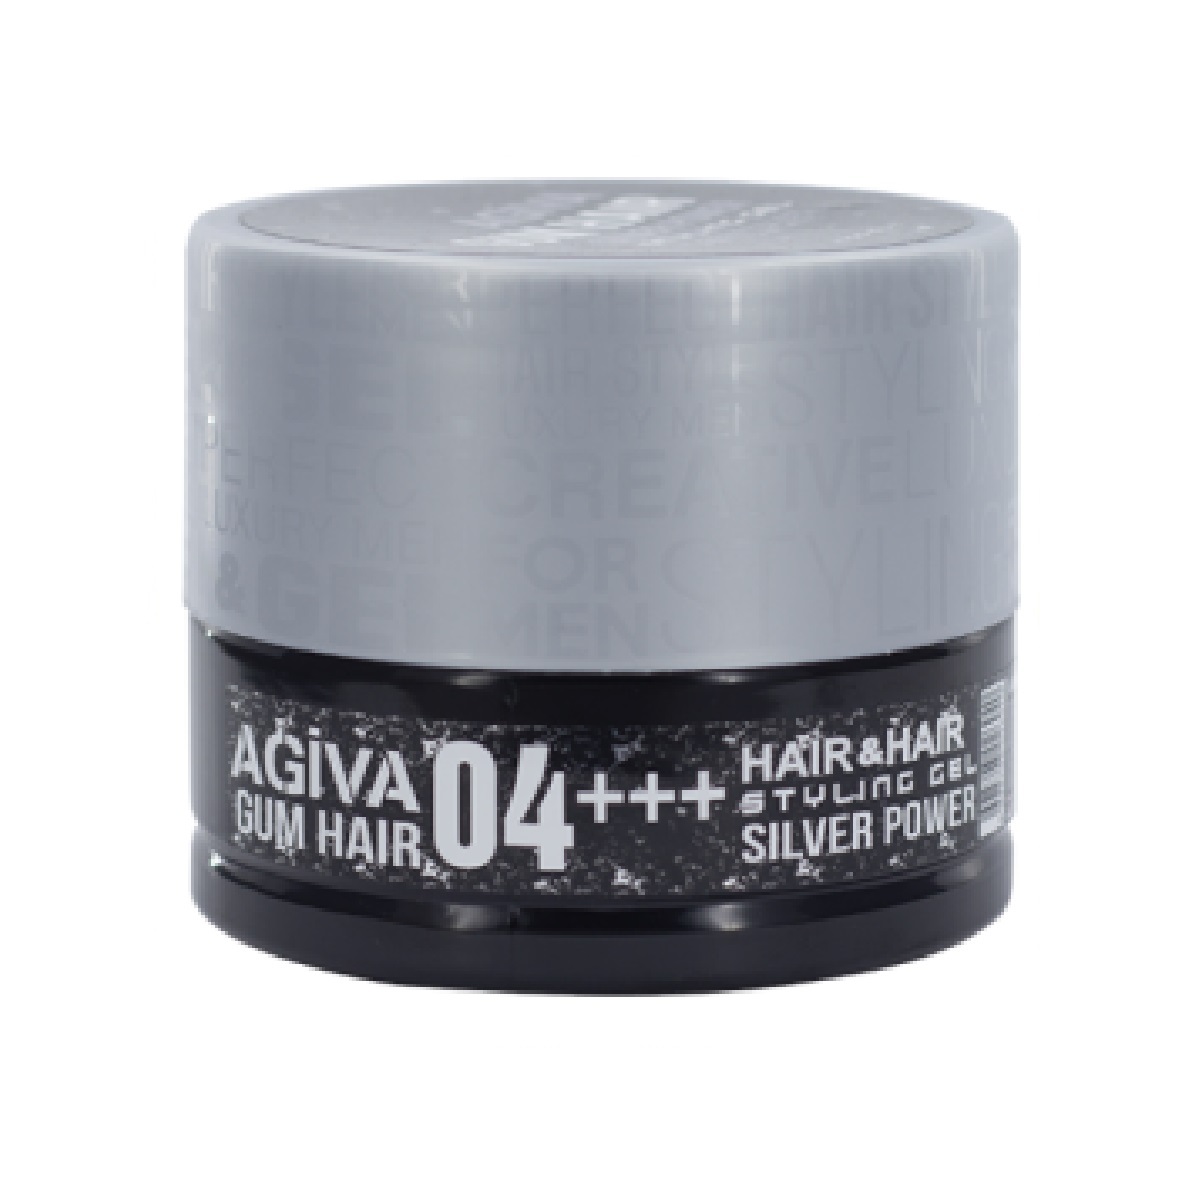 Гель для волос AGIVA Hair Gum Silver Power 04+++ для укладки, 700 мл